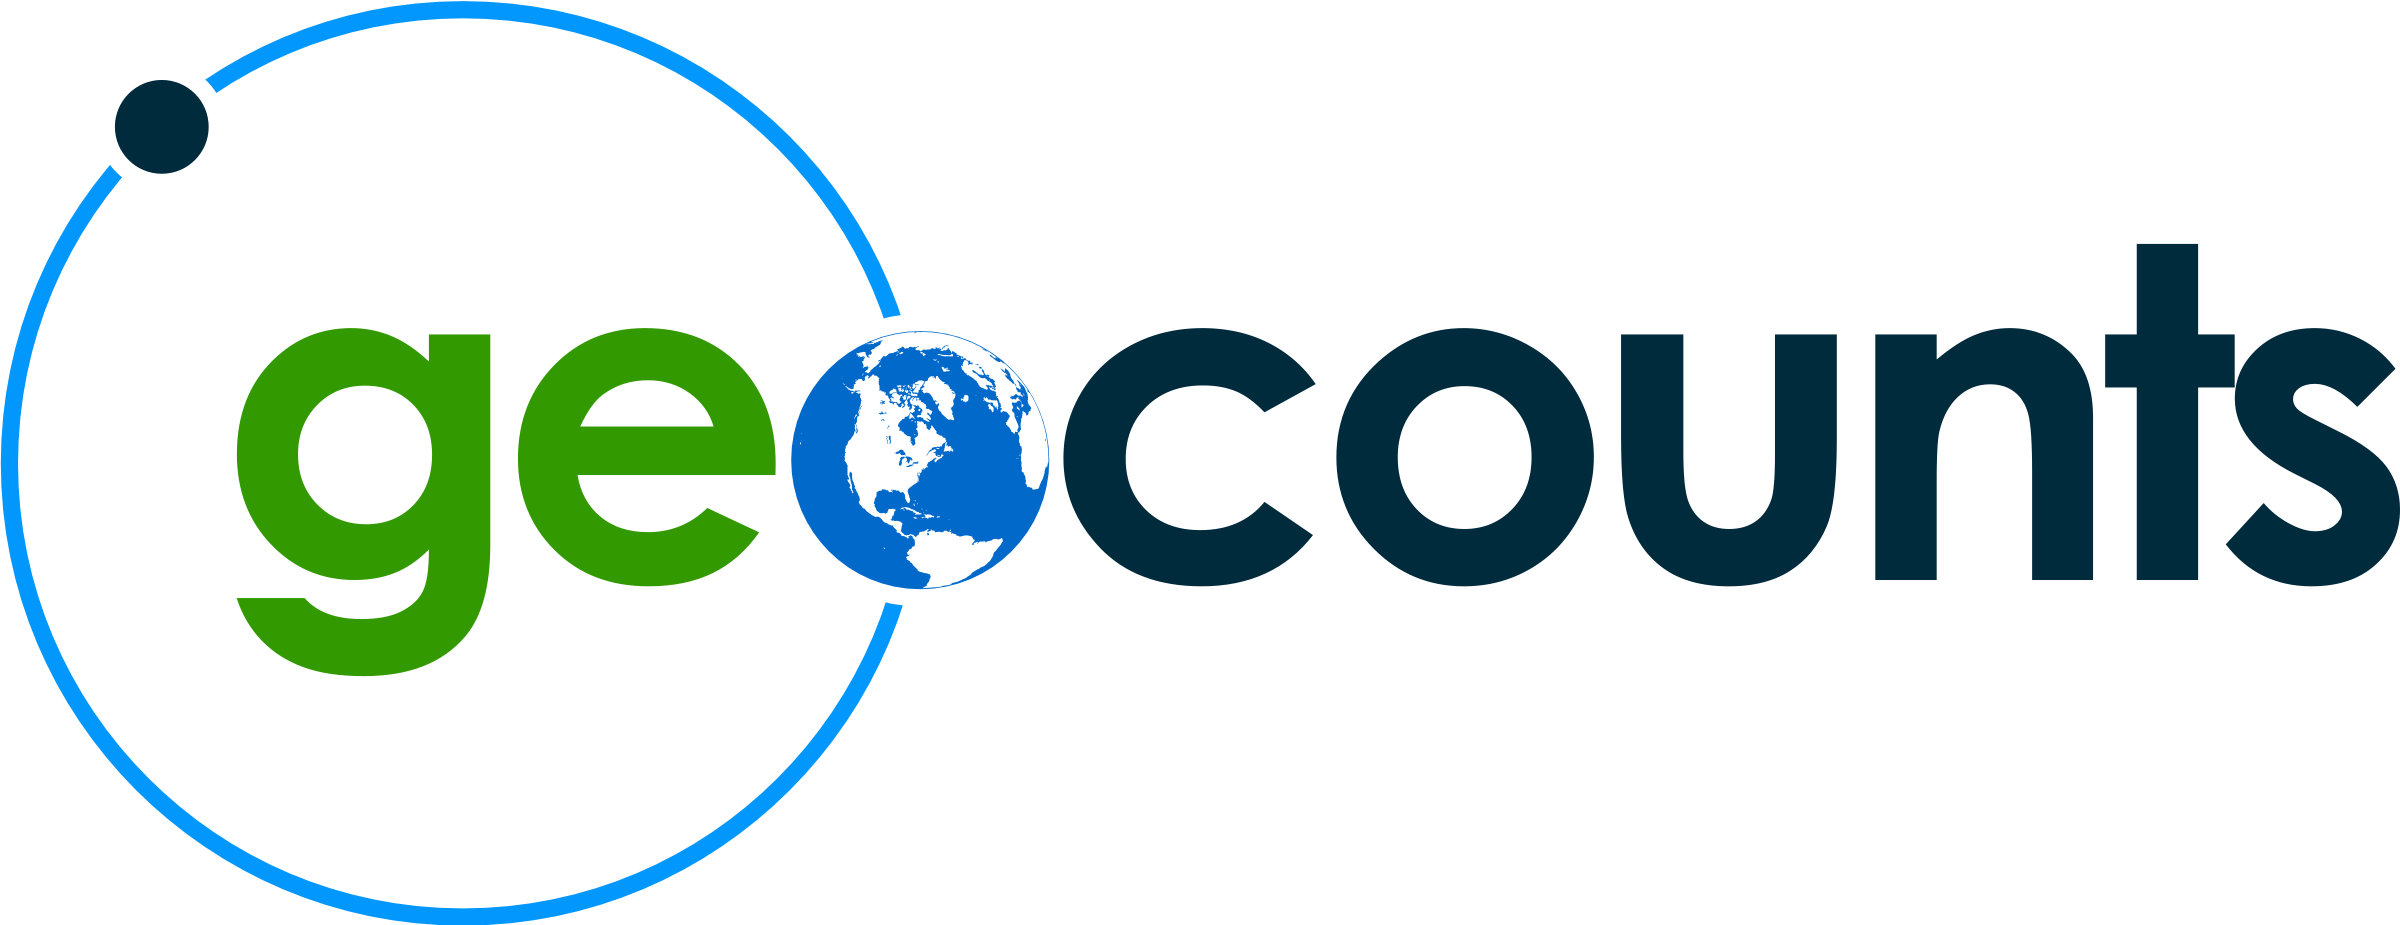 GEOCOUNTS Logo